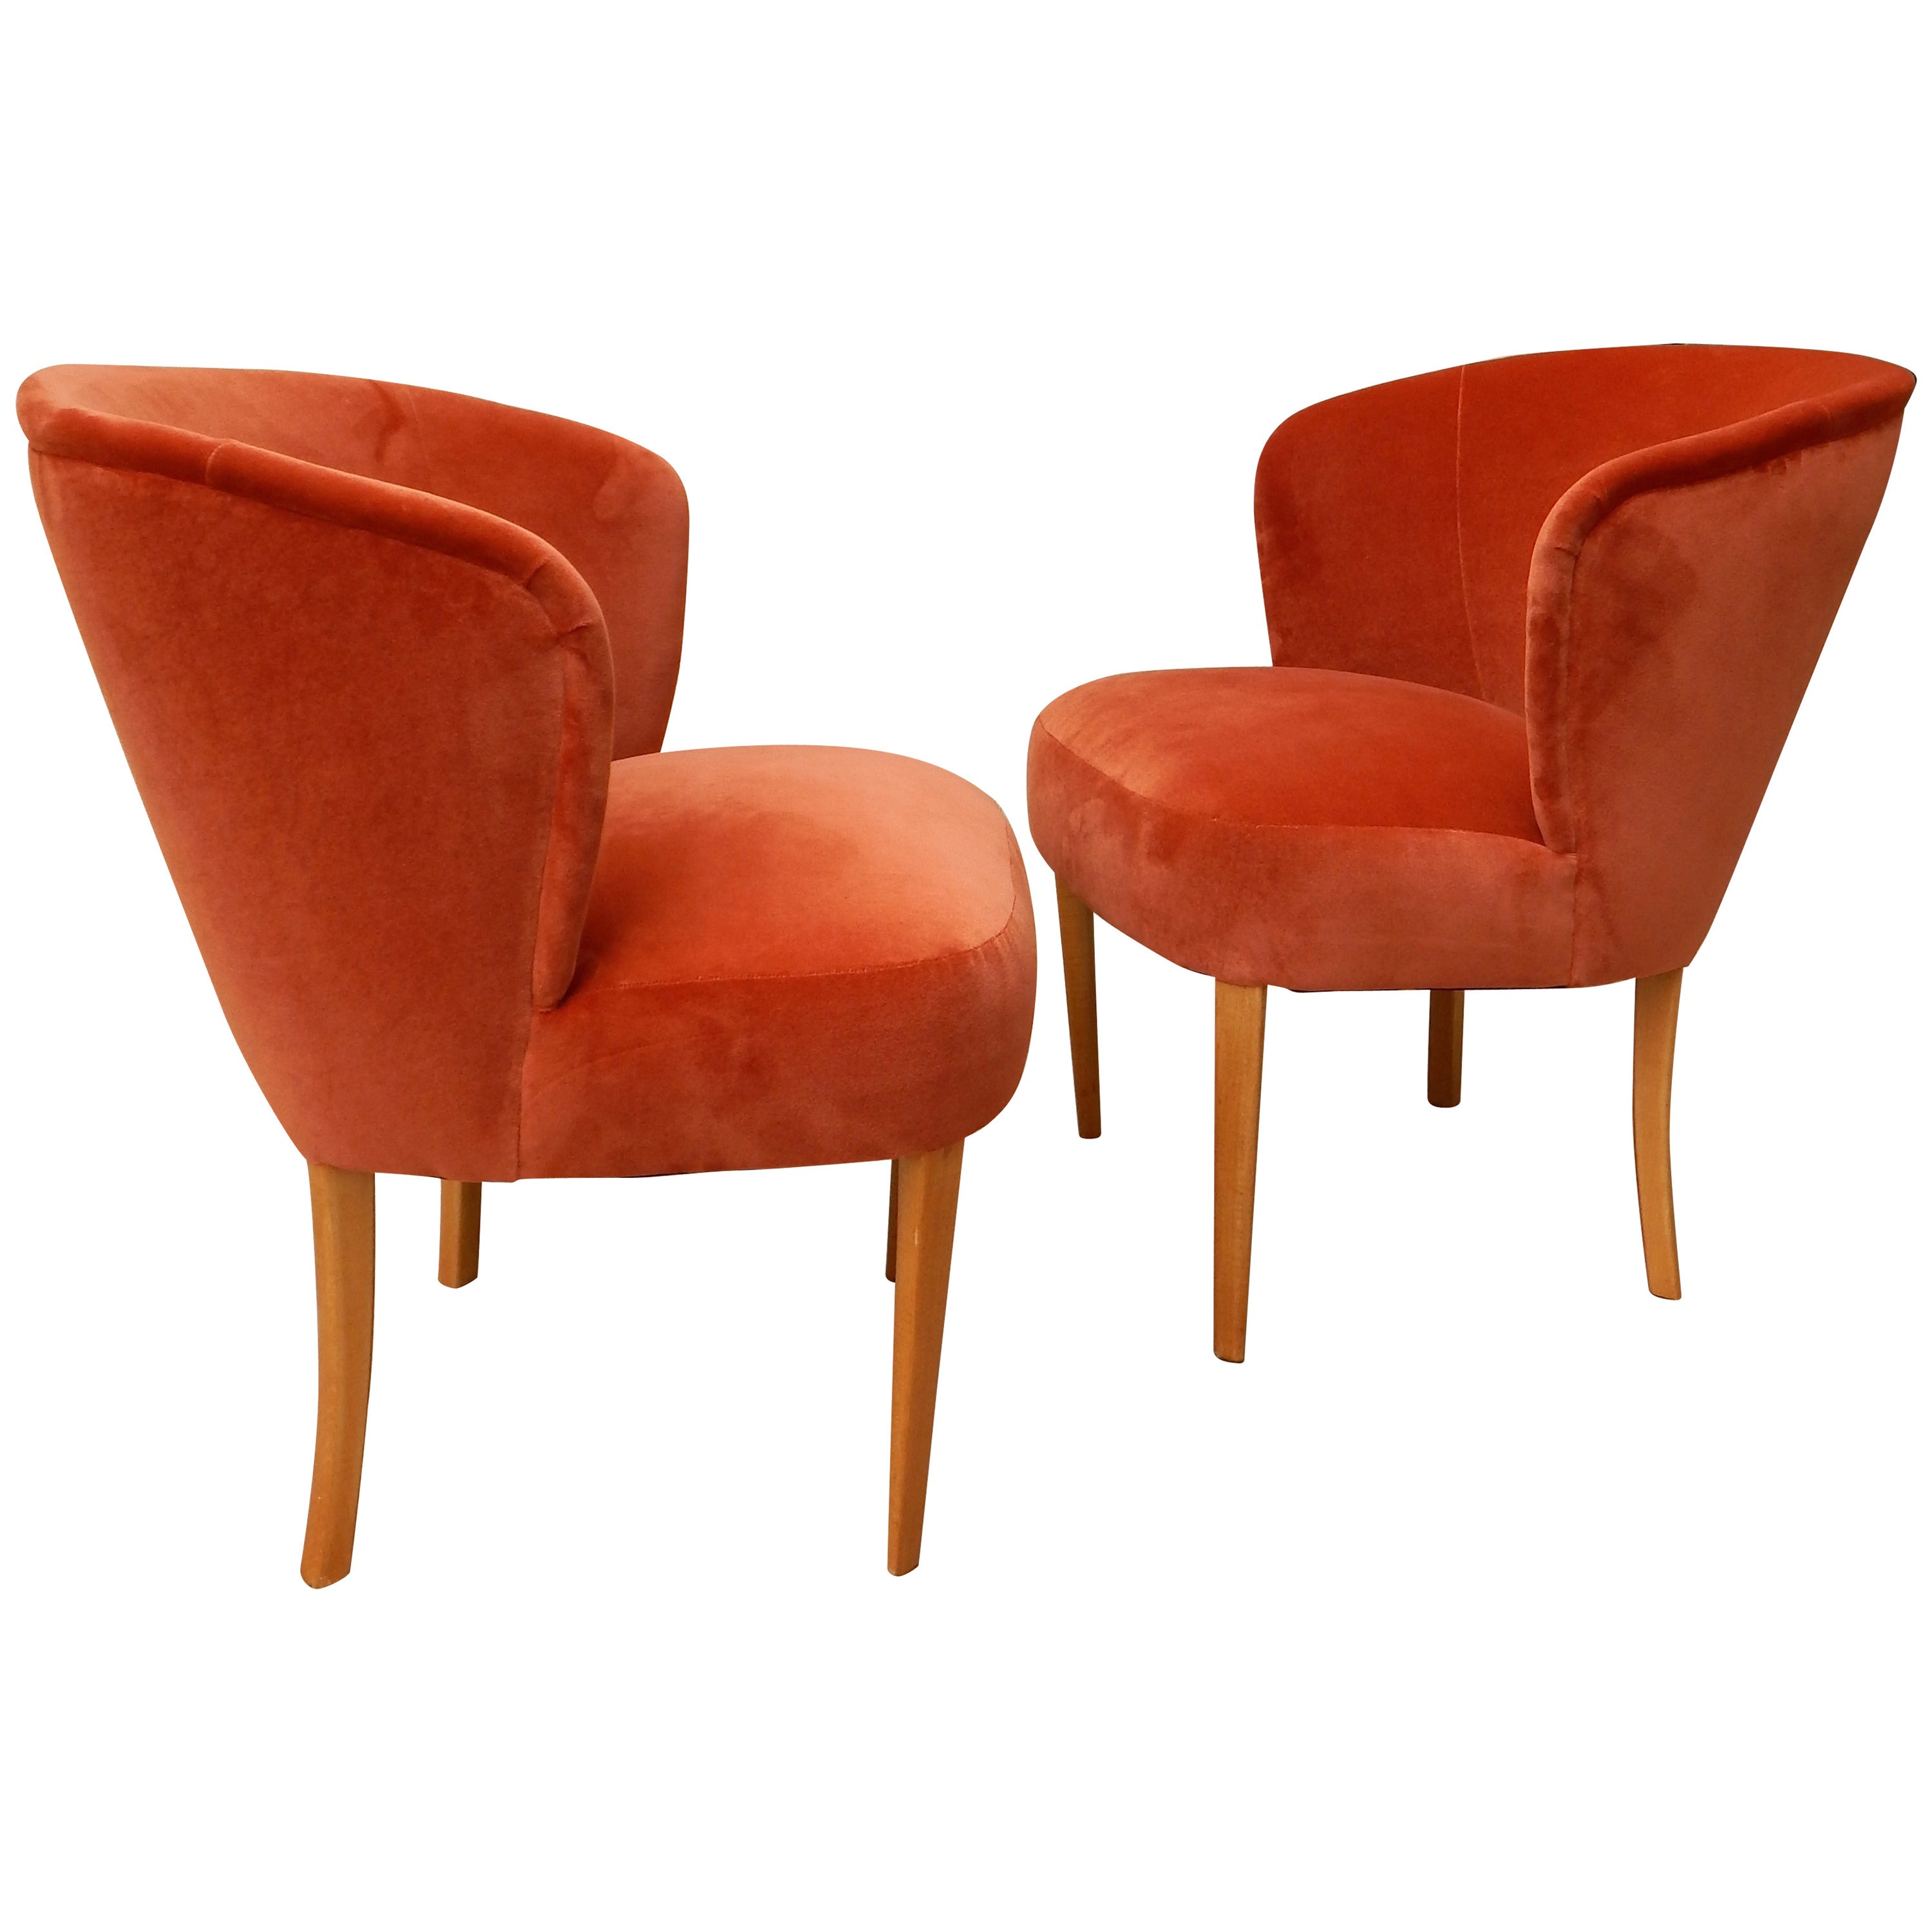 Pair of Swedish Upholstered Chairs, Carl Malmsten for O.H. Sjögren, circa 1950